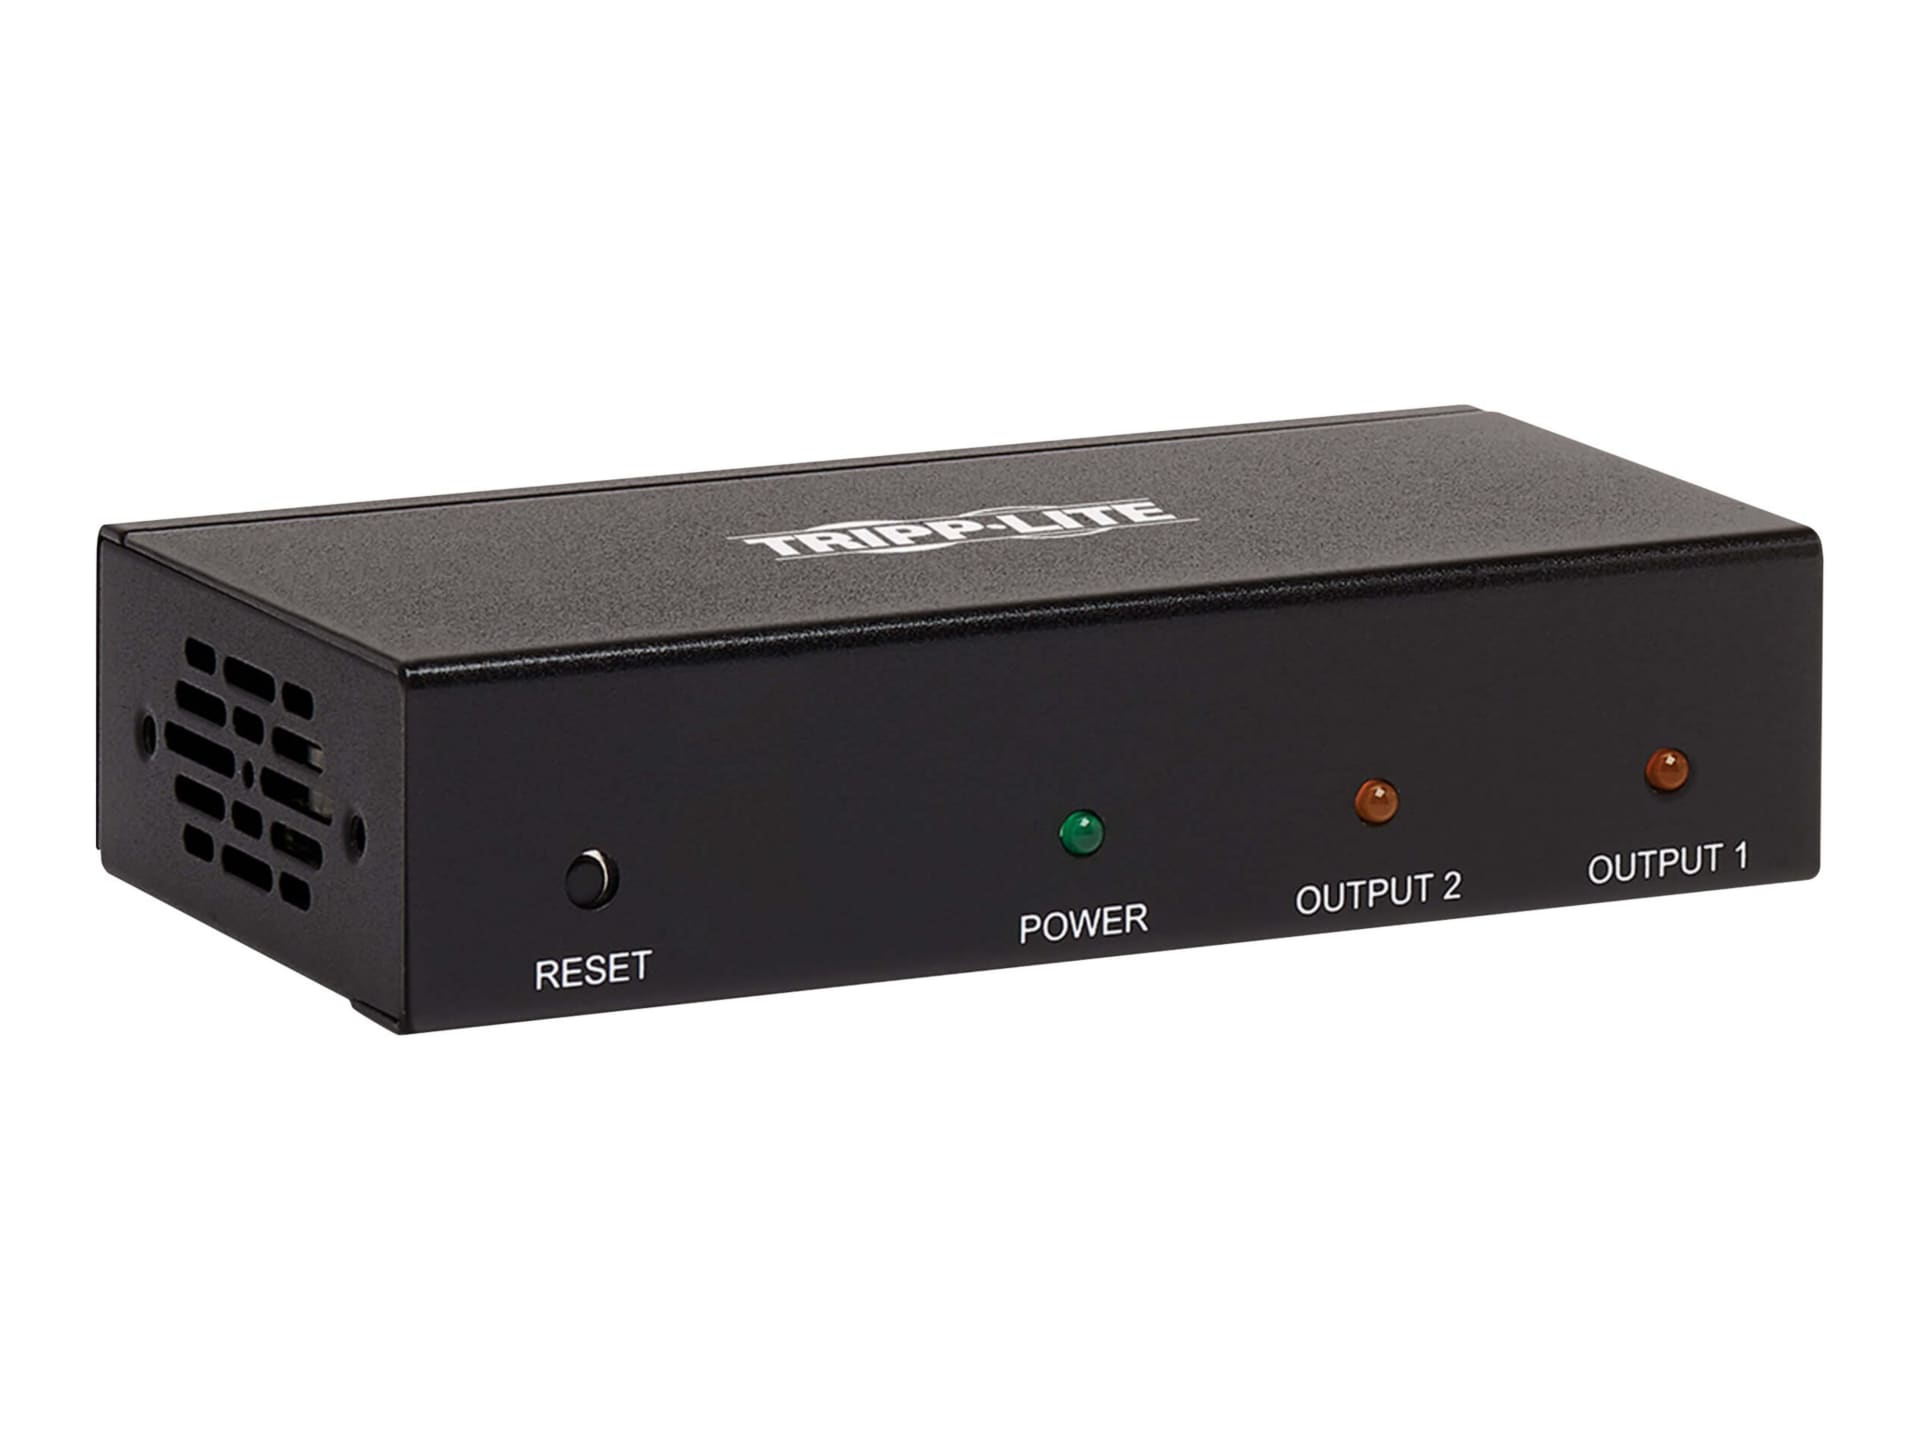 Tripp Lite 2-Port HDMI Splitter, 4K x 2K @ 60 Hz, 4:4:4, Multi-Resolution Support, HDR, HDCP 2.2, TAA - video/audio